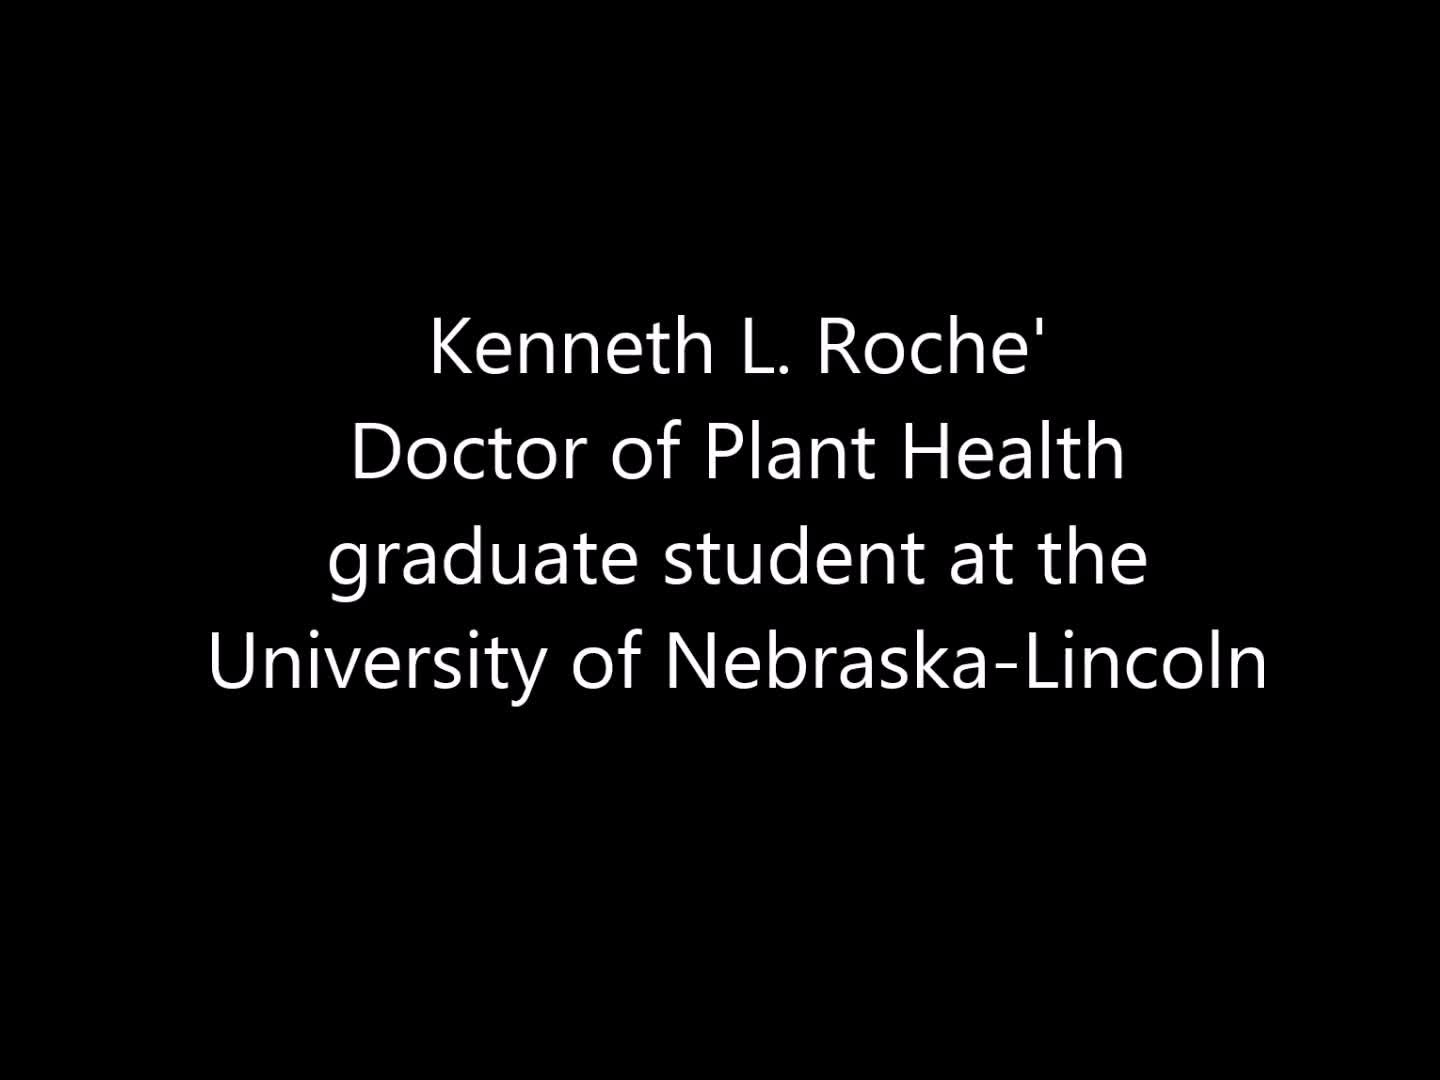 Kenneth Roche', DPH graduate student